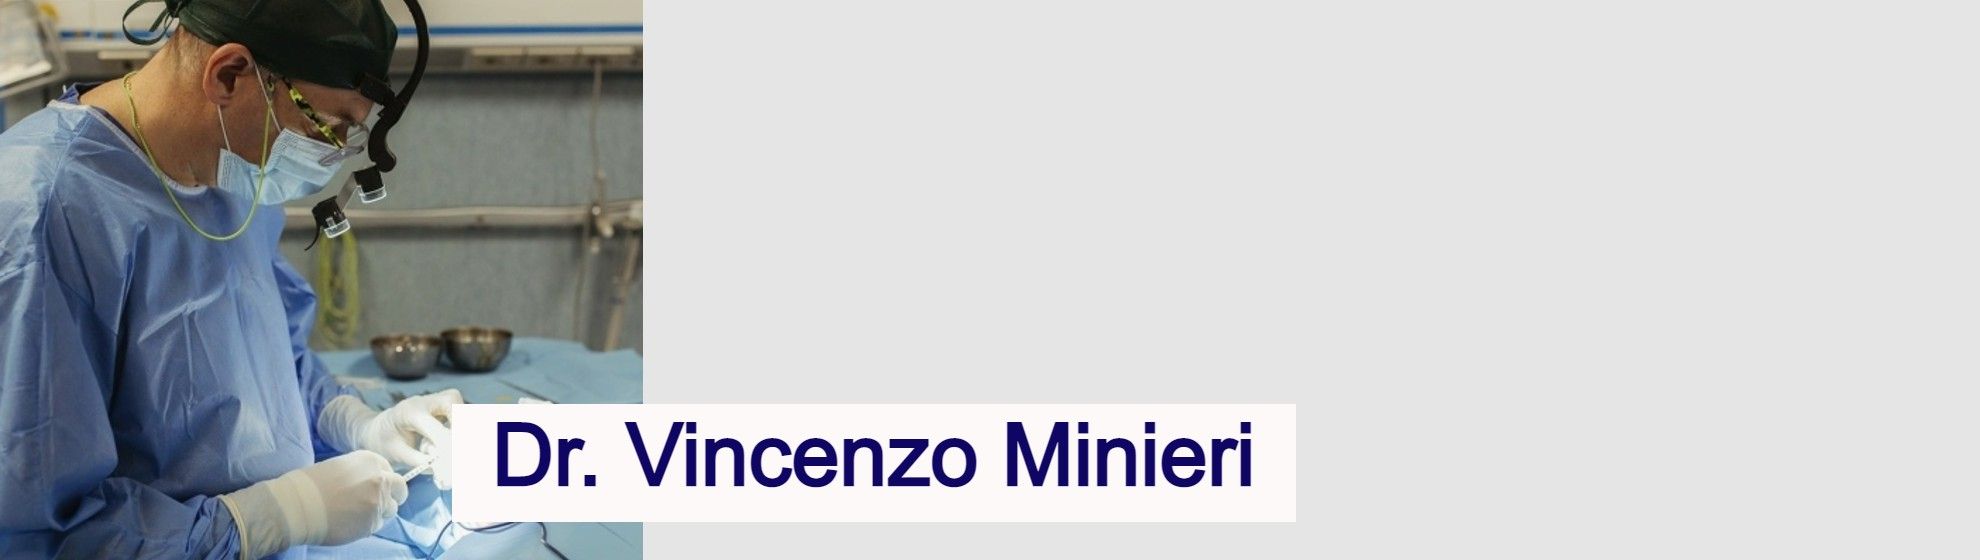 Dr. Vincenzo Minieri